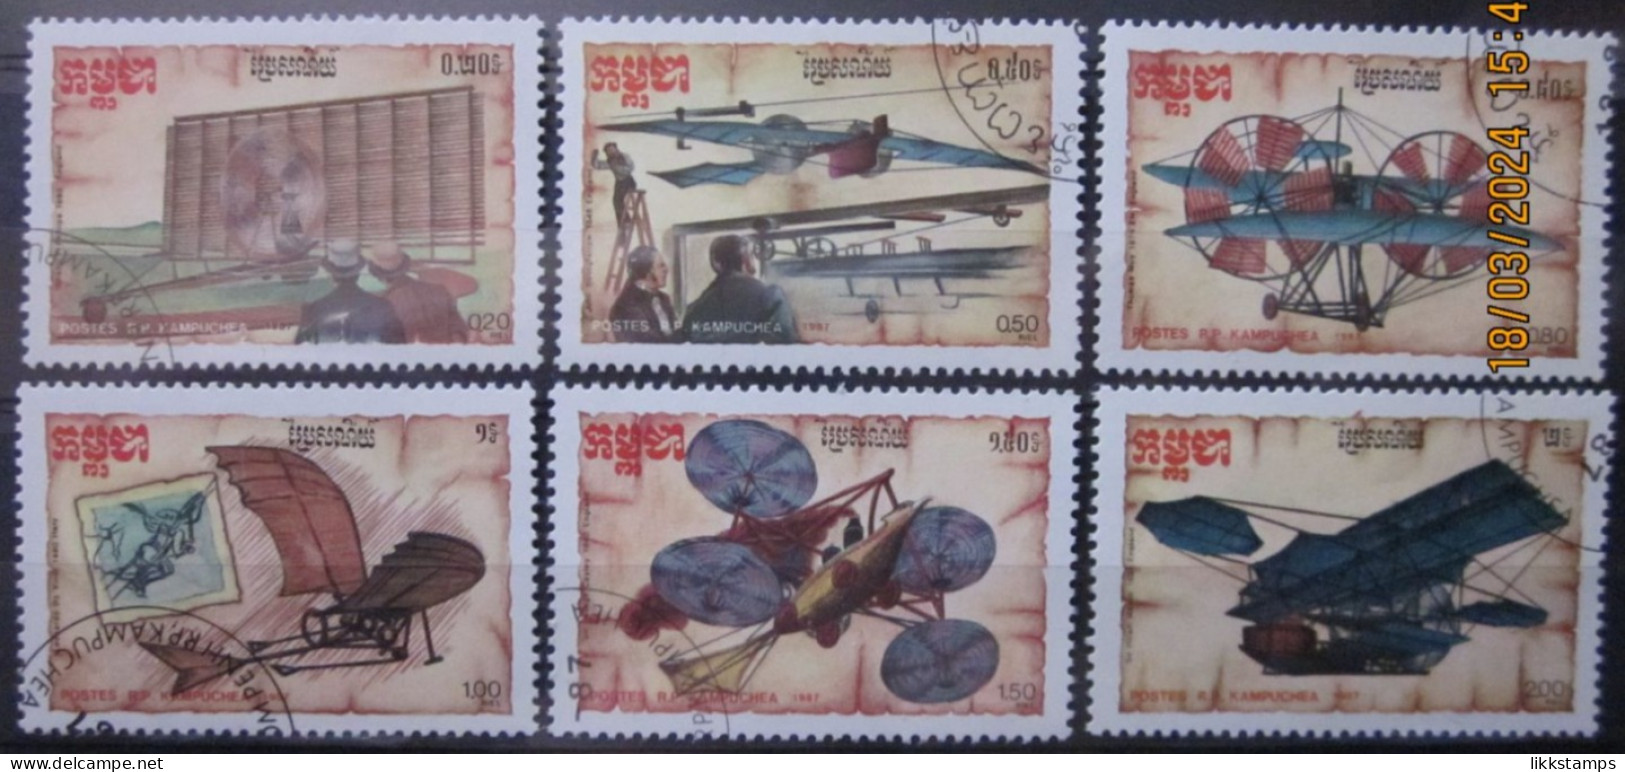 KAMPUCHEA 1987 ~ S.G. 831 - 836, ~ EXPERIMENTAL AIRCRAFT. ~ VFU #03345 - Kampuchea